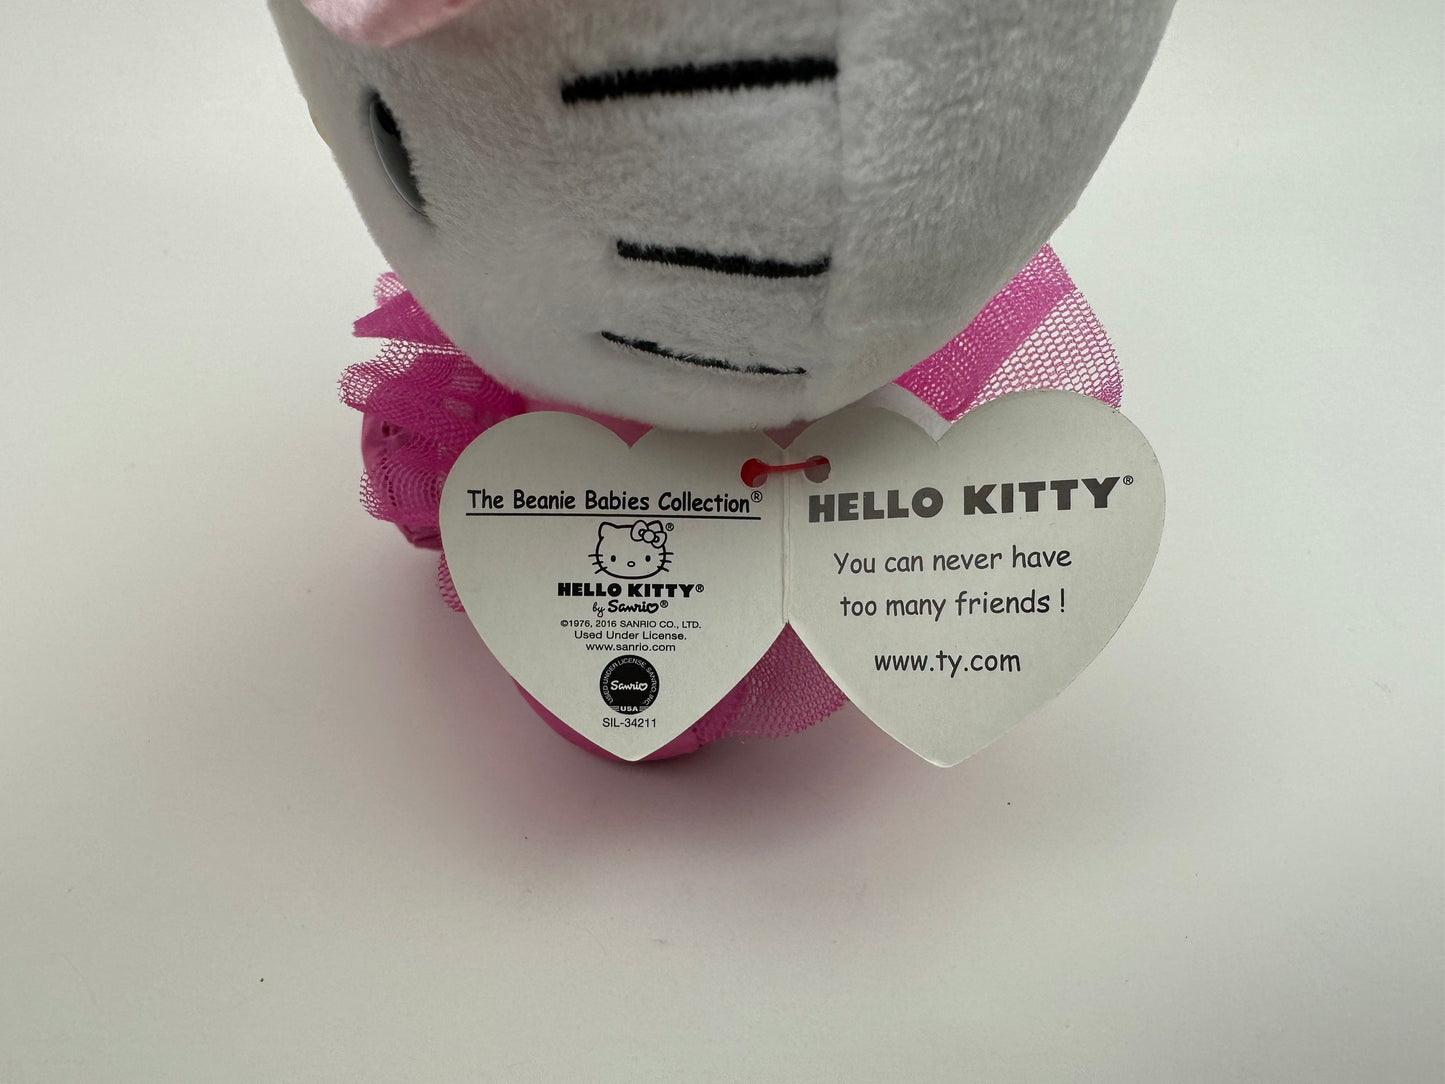 Ty Beanie Baby “Hello Kitty” Pink Tutu Edition (6 inch)